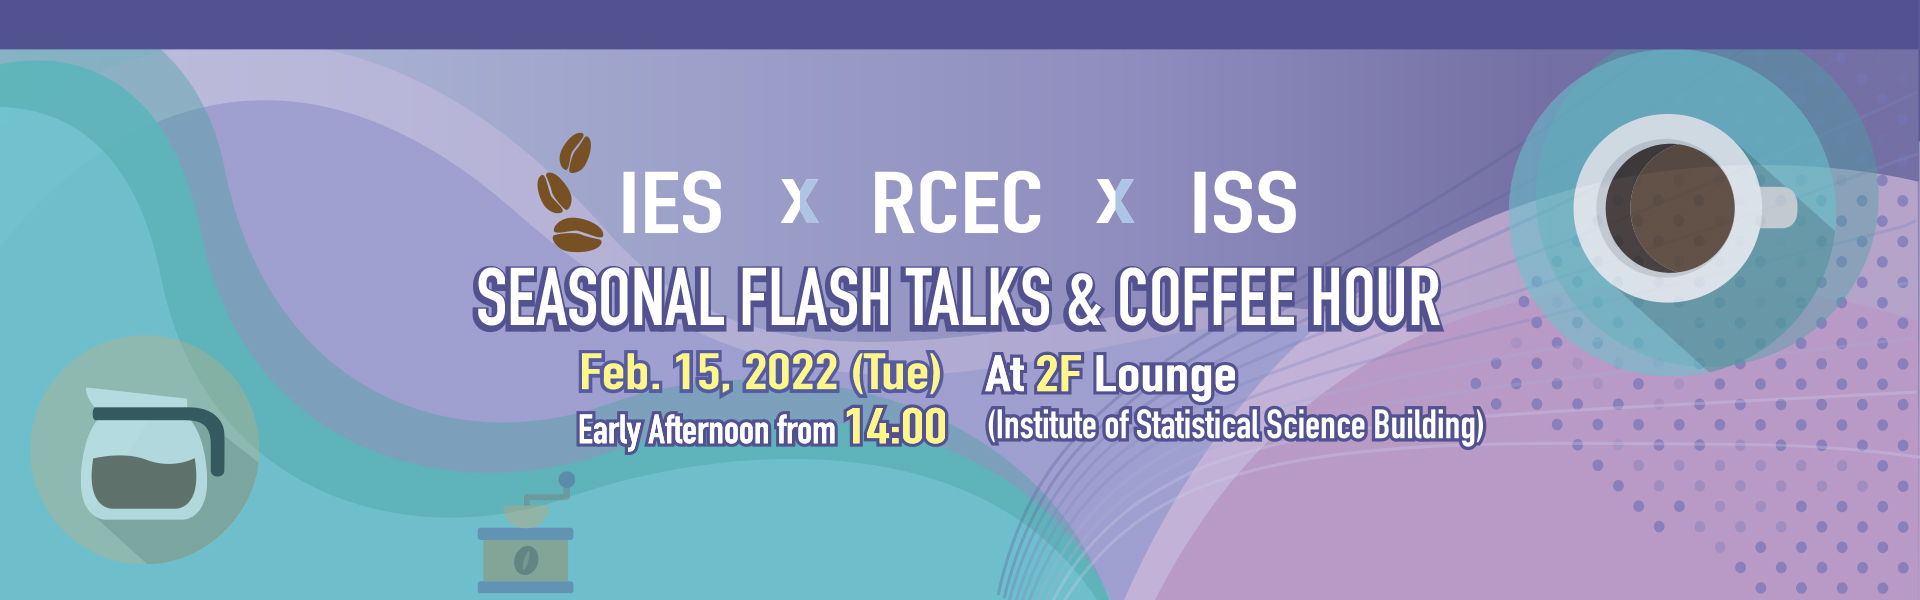 IES X RCEC X ISS seasonal flash talks and coffee hour